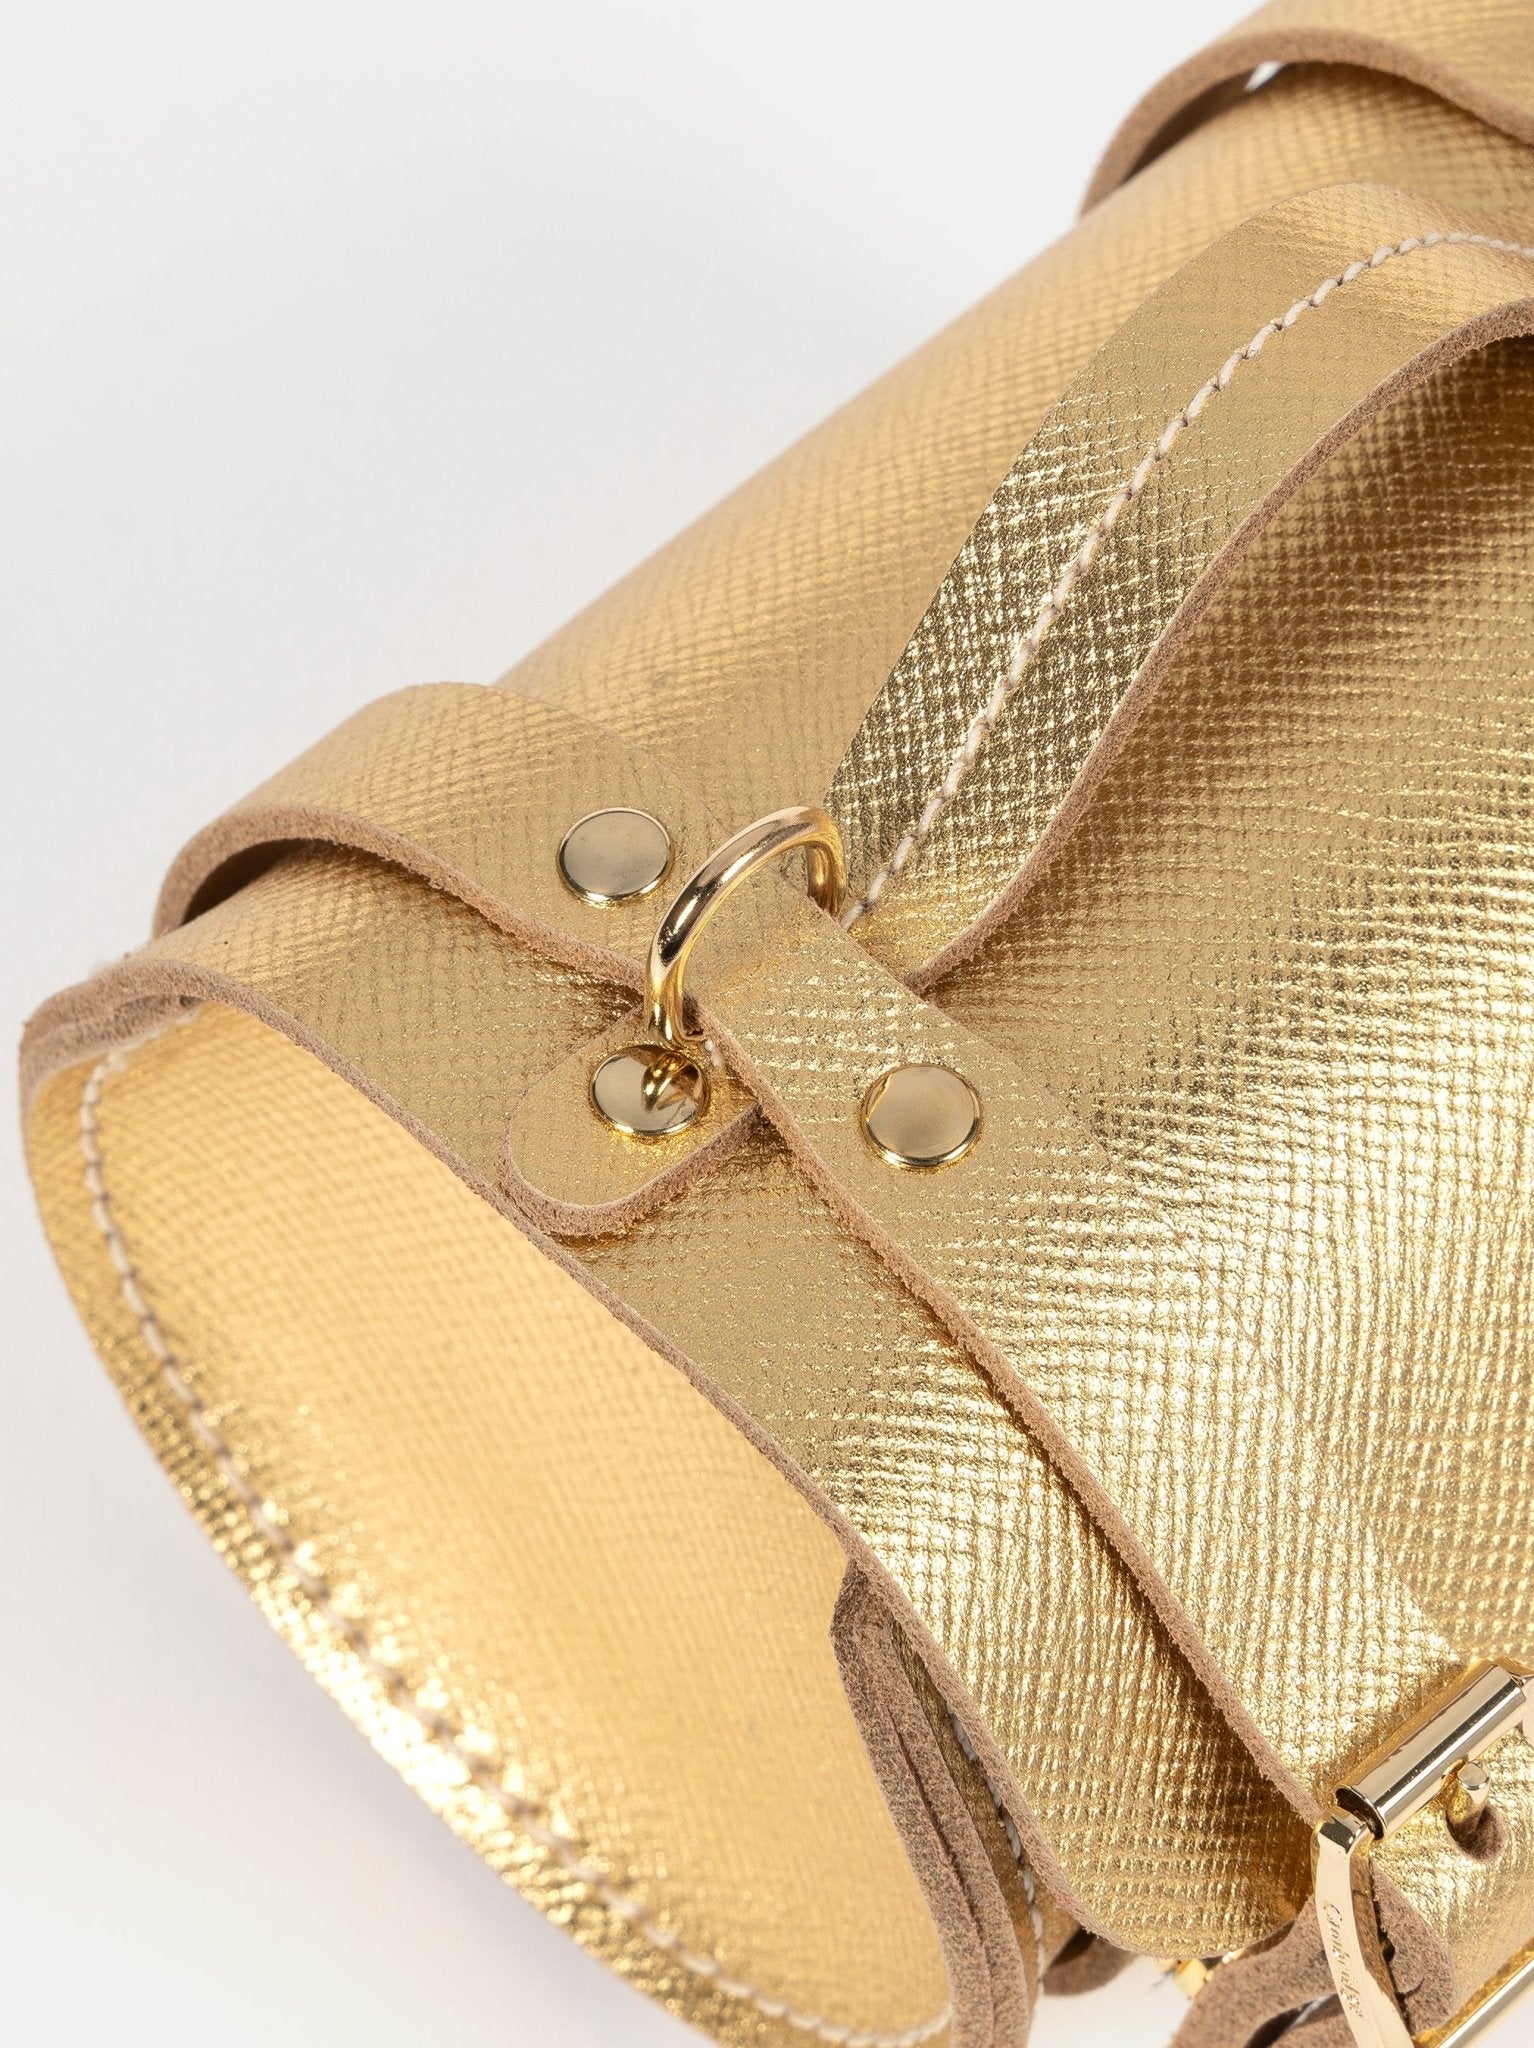 The Micro Bowls Bag - Foil Gold Saffiano - The Cambridge Satchel Company EU Store